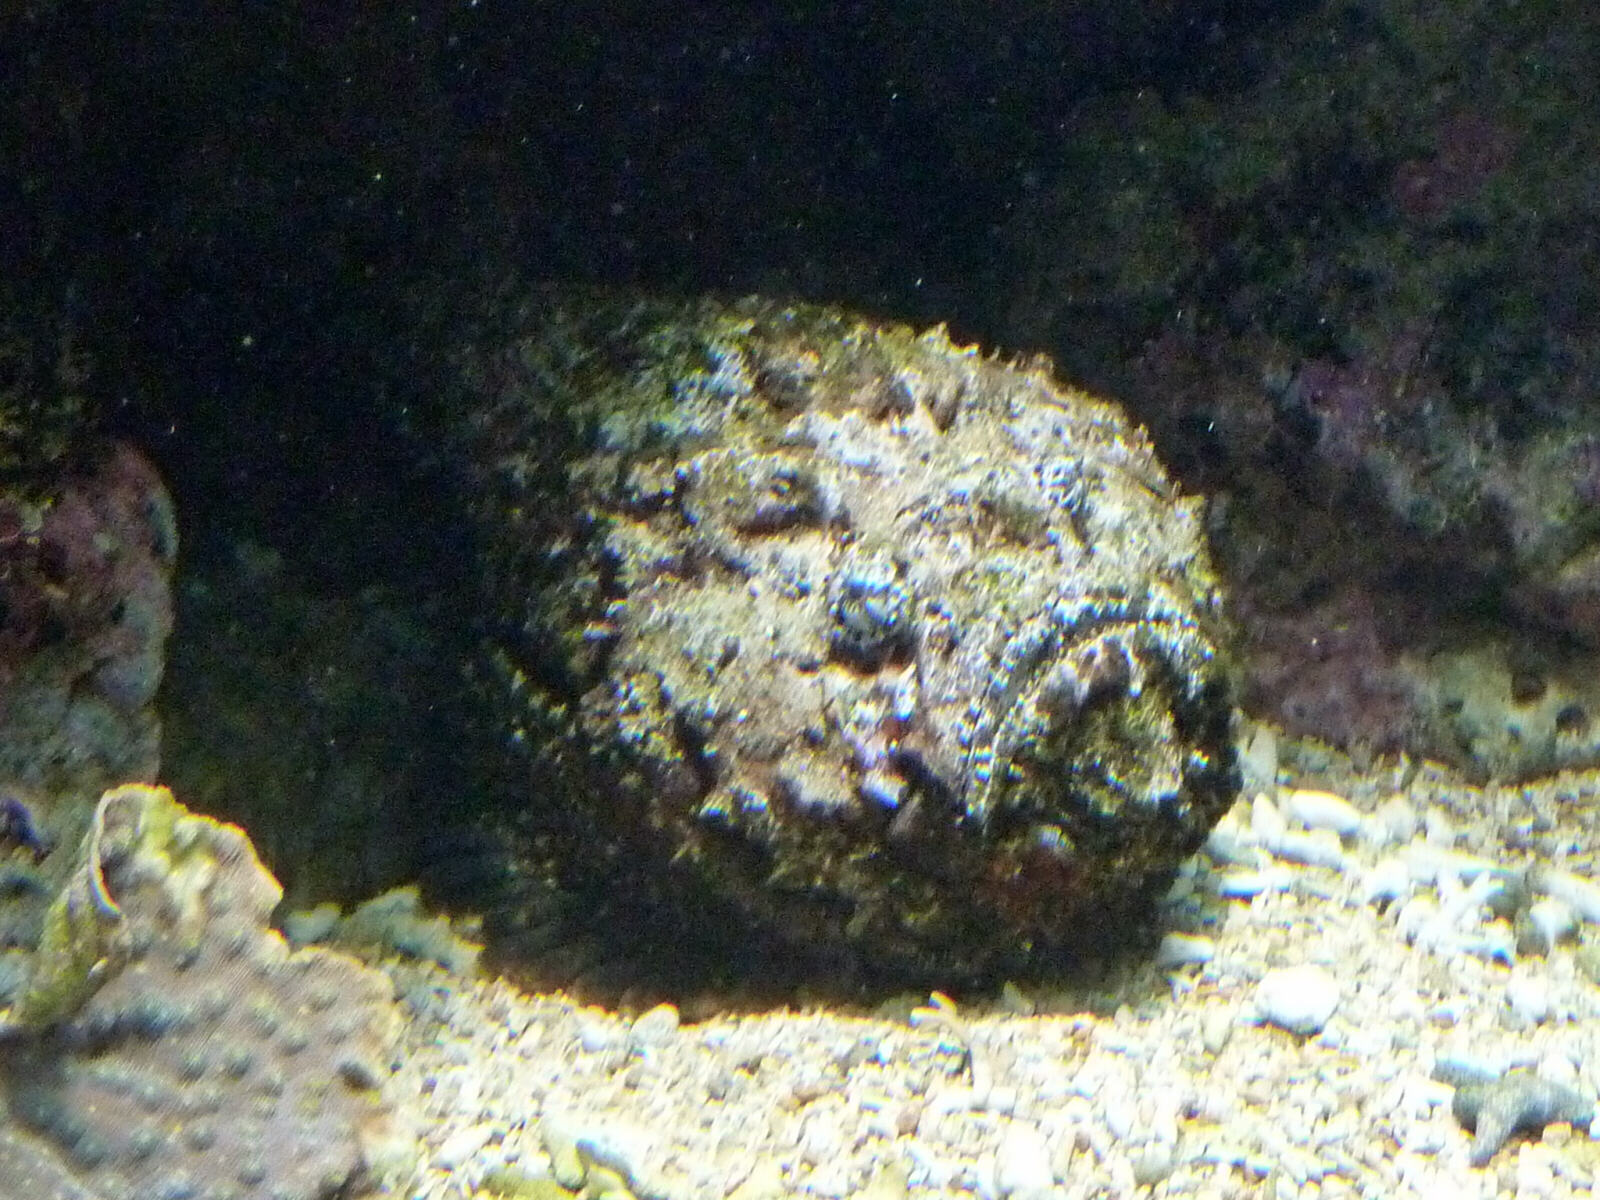 A stone fish in the aquarium at Noumea, New Caledonia